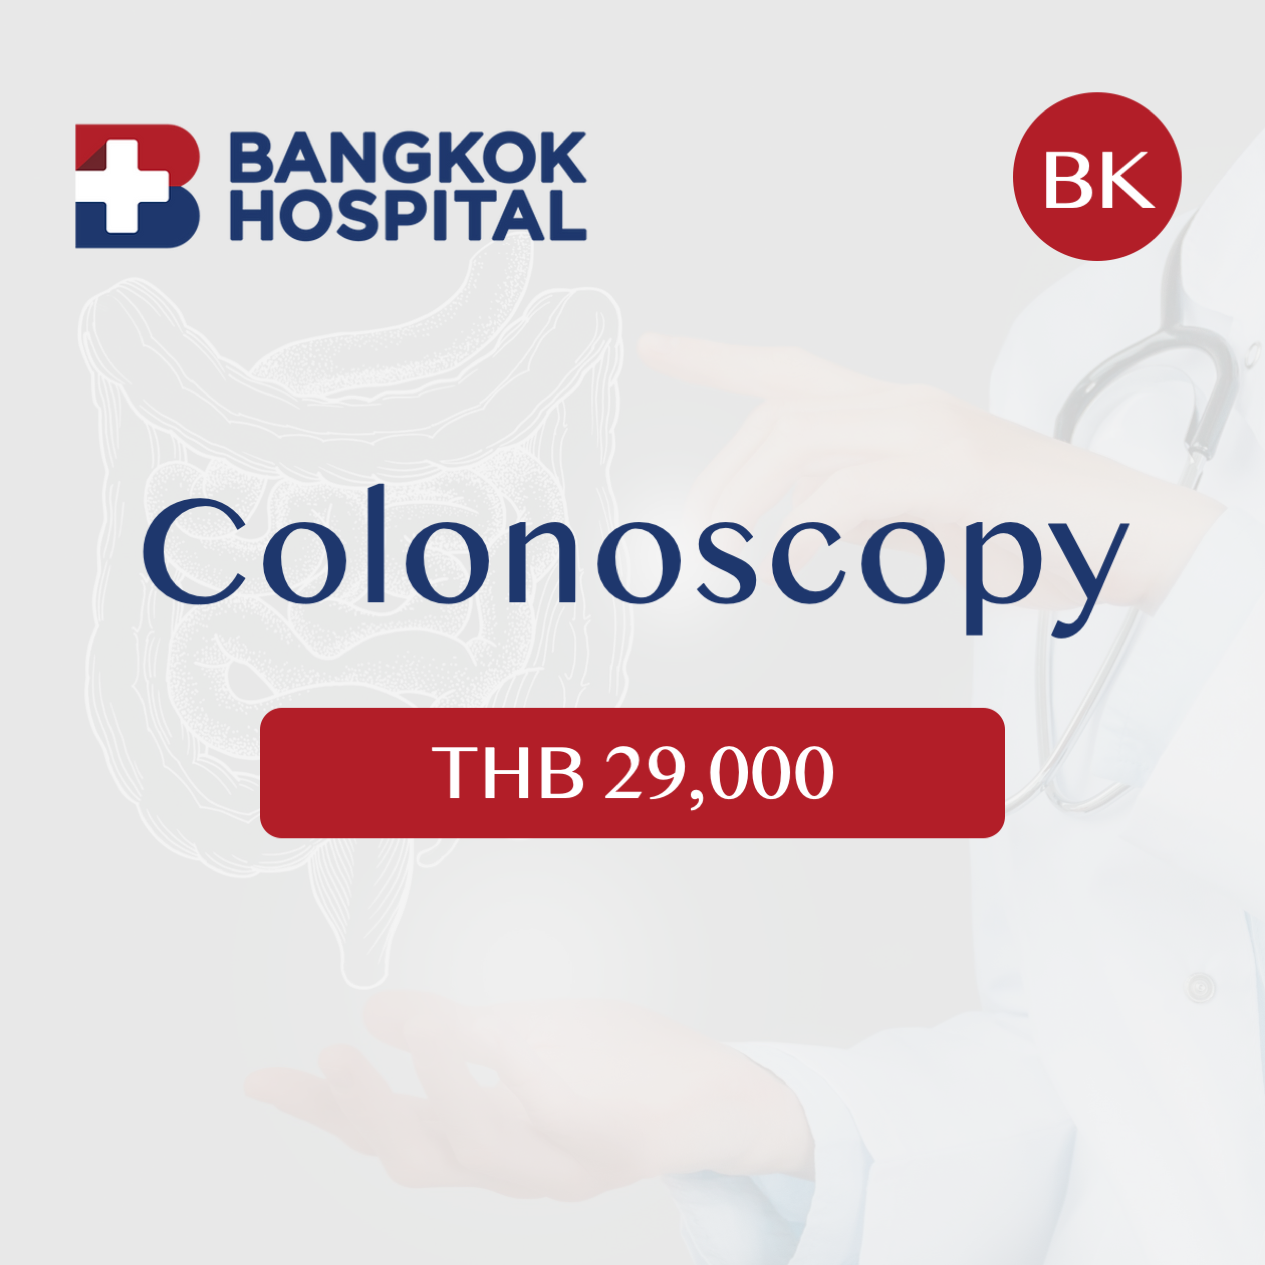 Bangkok Hospital (BK) Colonoscopy